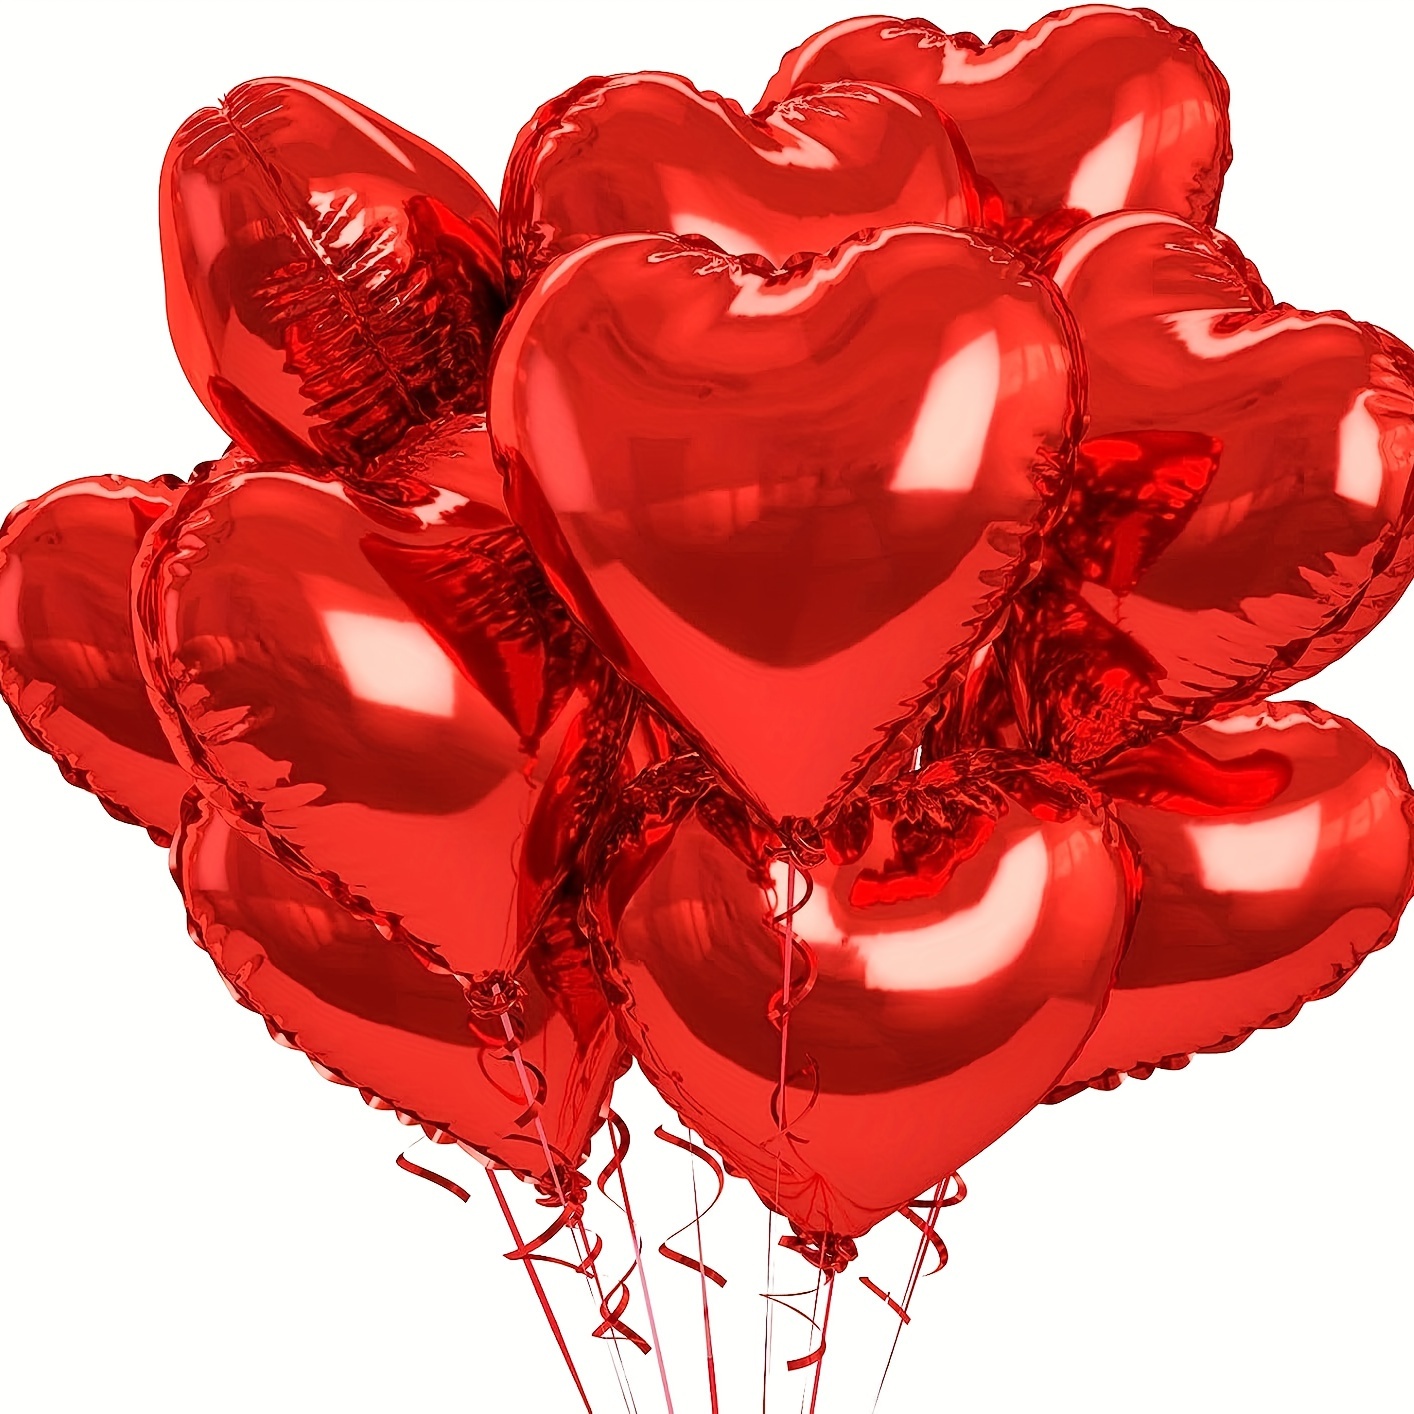 

30pcs, Red Heart-shaped Foil Balloons, Valentine's Day Decor, Birthday Decor, Wedding Decor, Anniversary Decor, Romantic Scene Decor, Mother's Day Decor, Home Decor, Party Decor Supplies